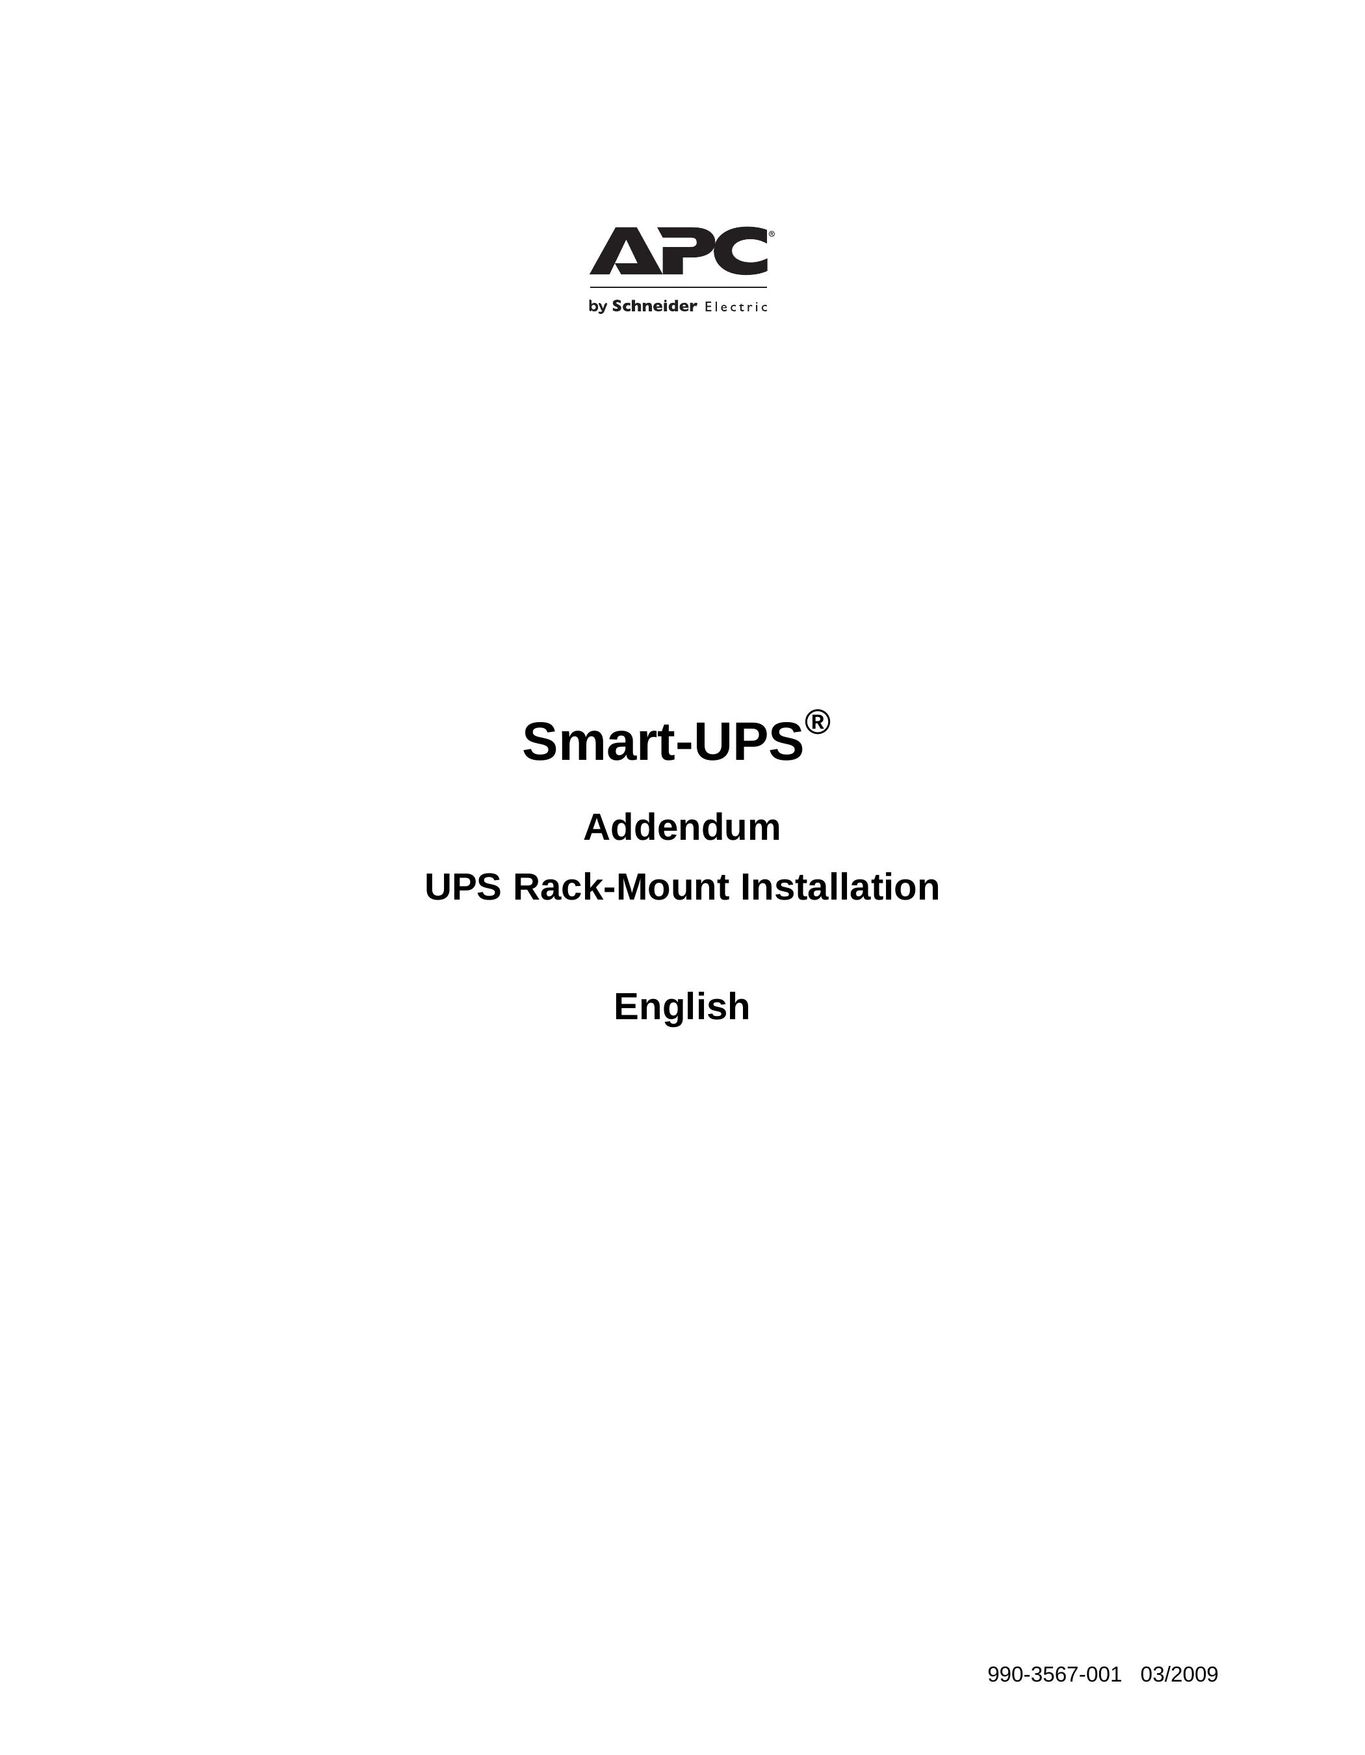 APC 120 V Power Supply User Manual